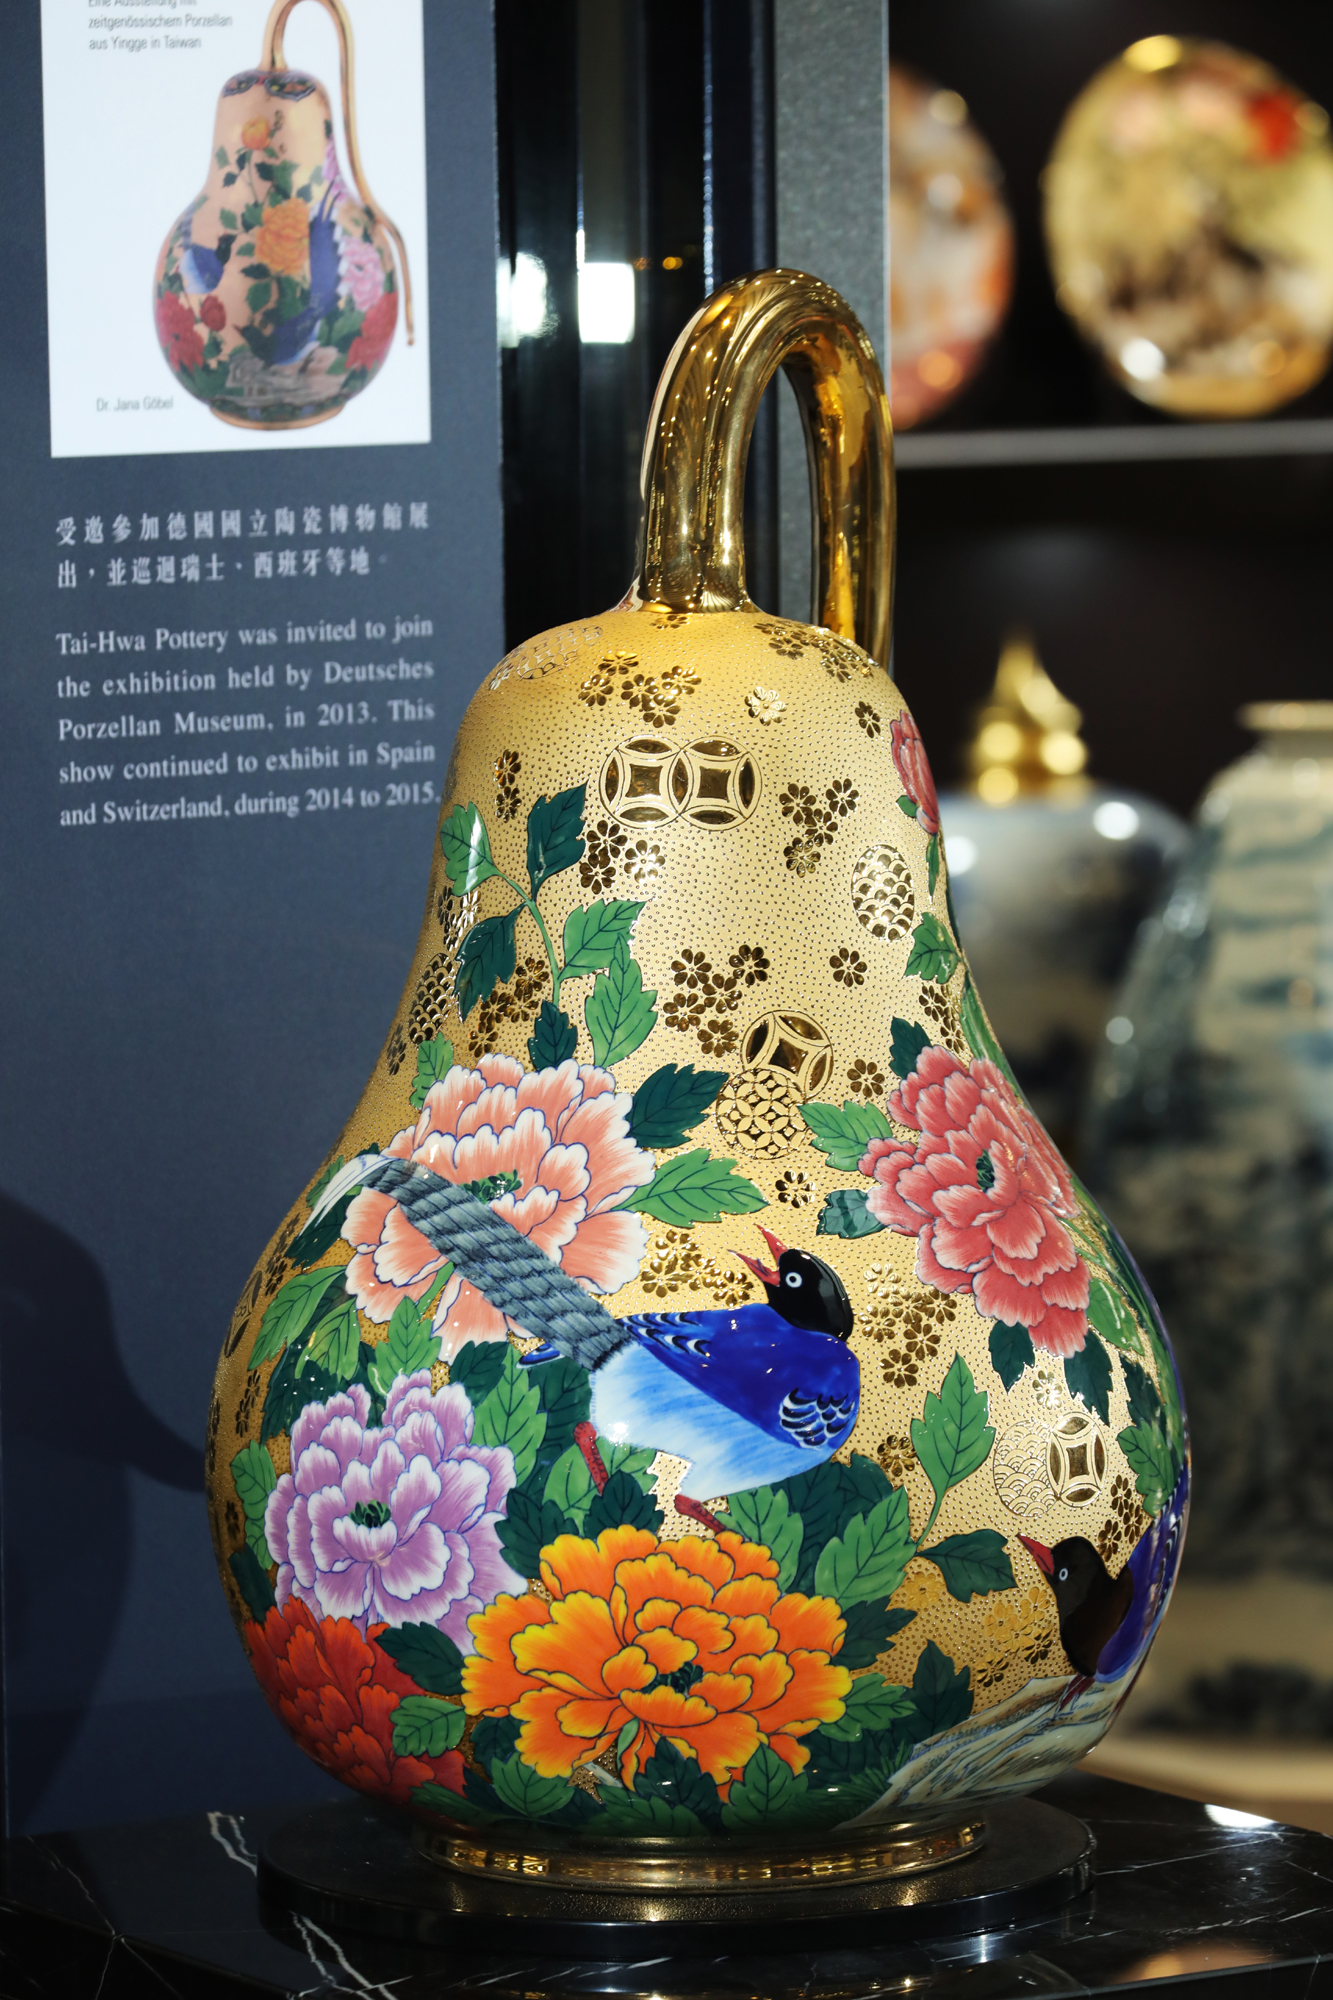 臺華窯 台崋窯 Tai-Hwa Pottery 花瓶 壺Pottery - 花瓶